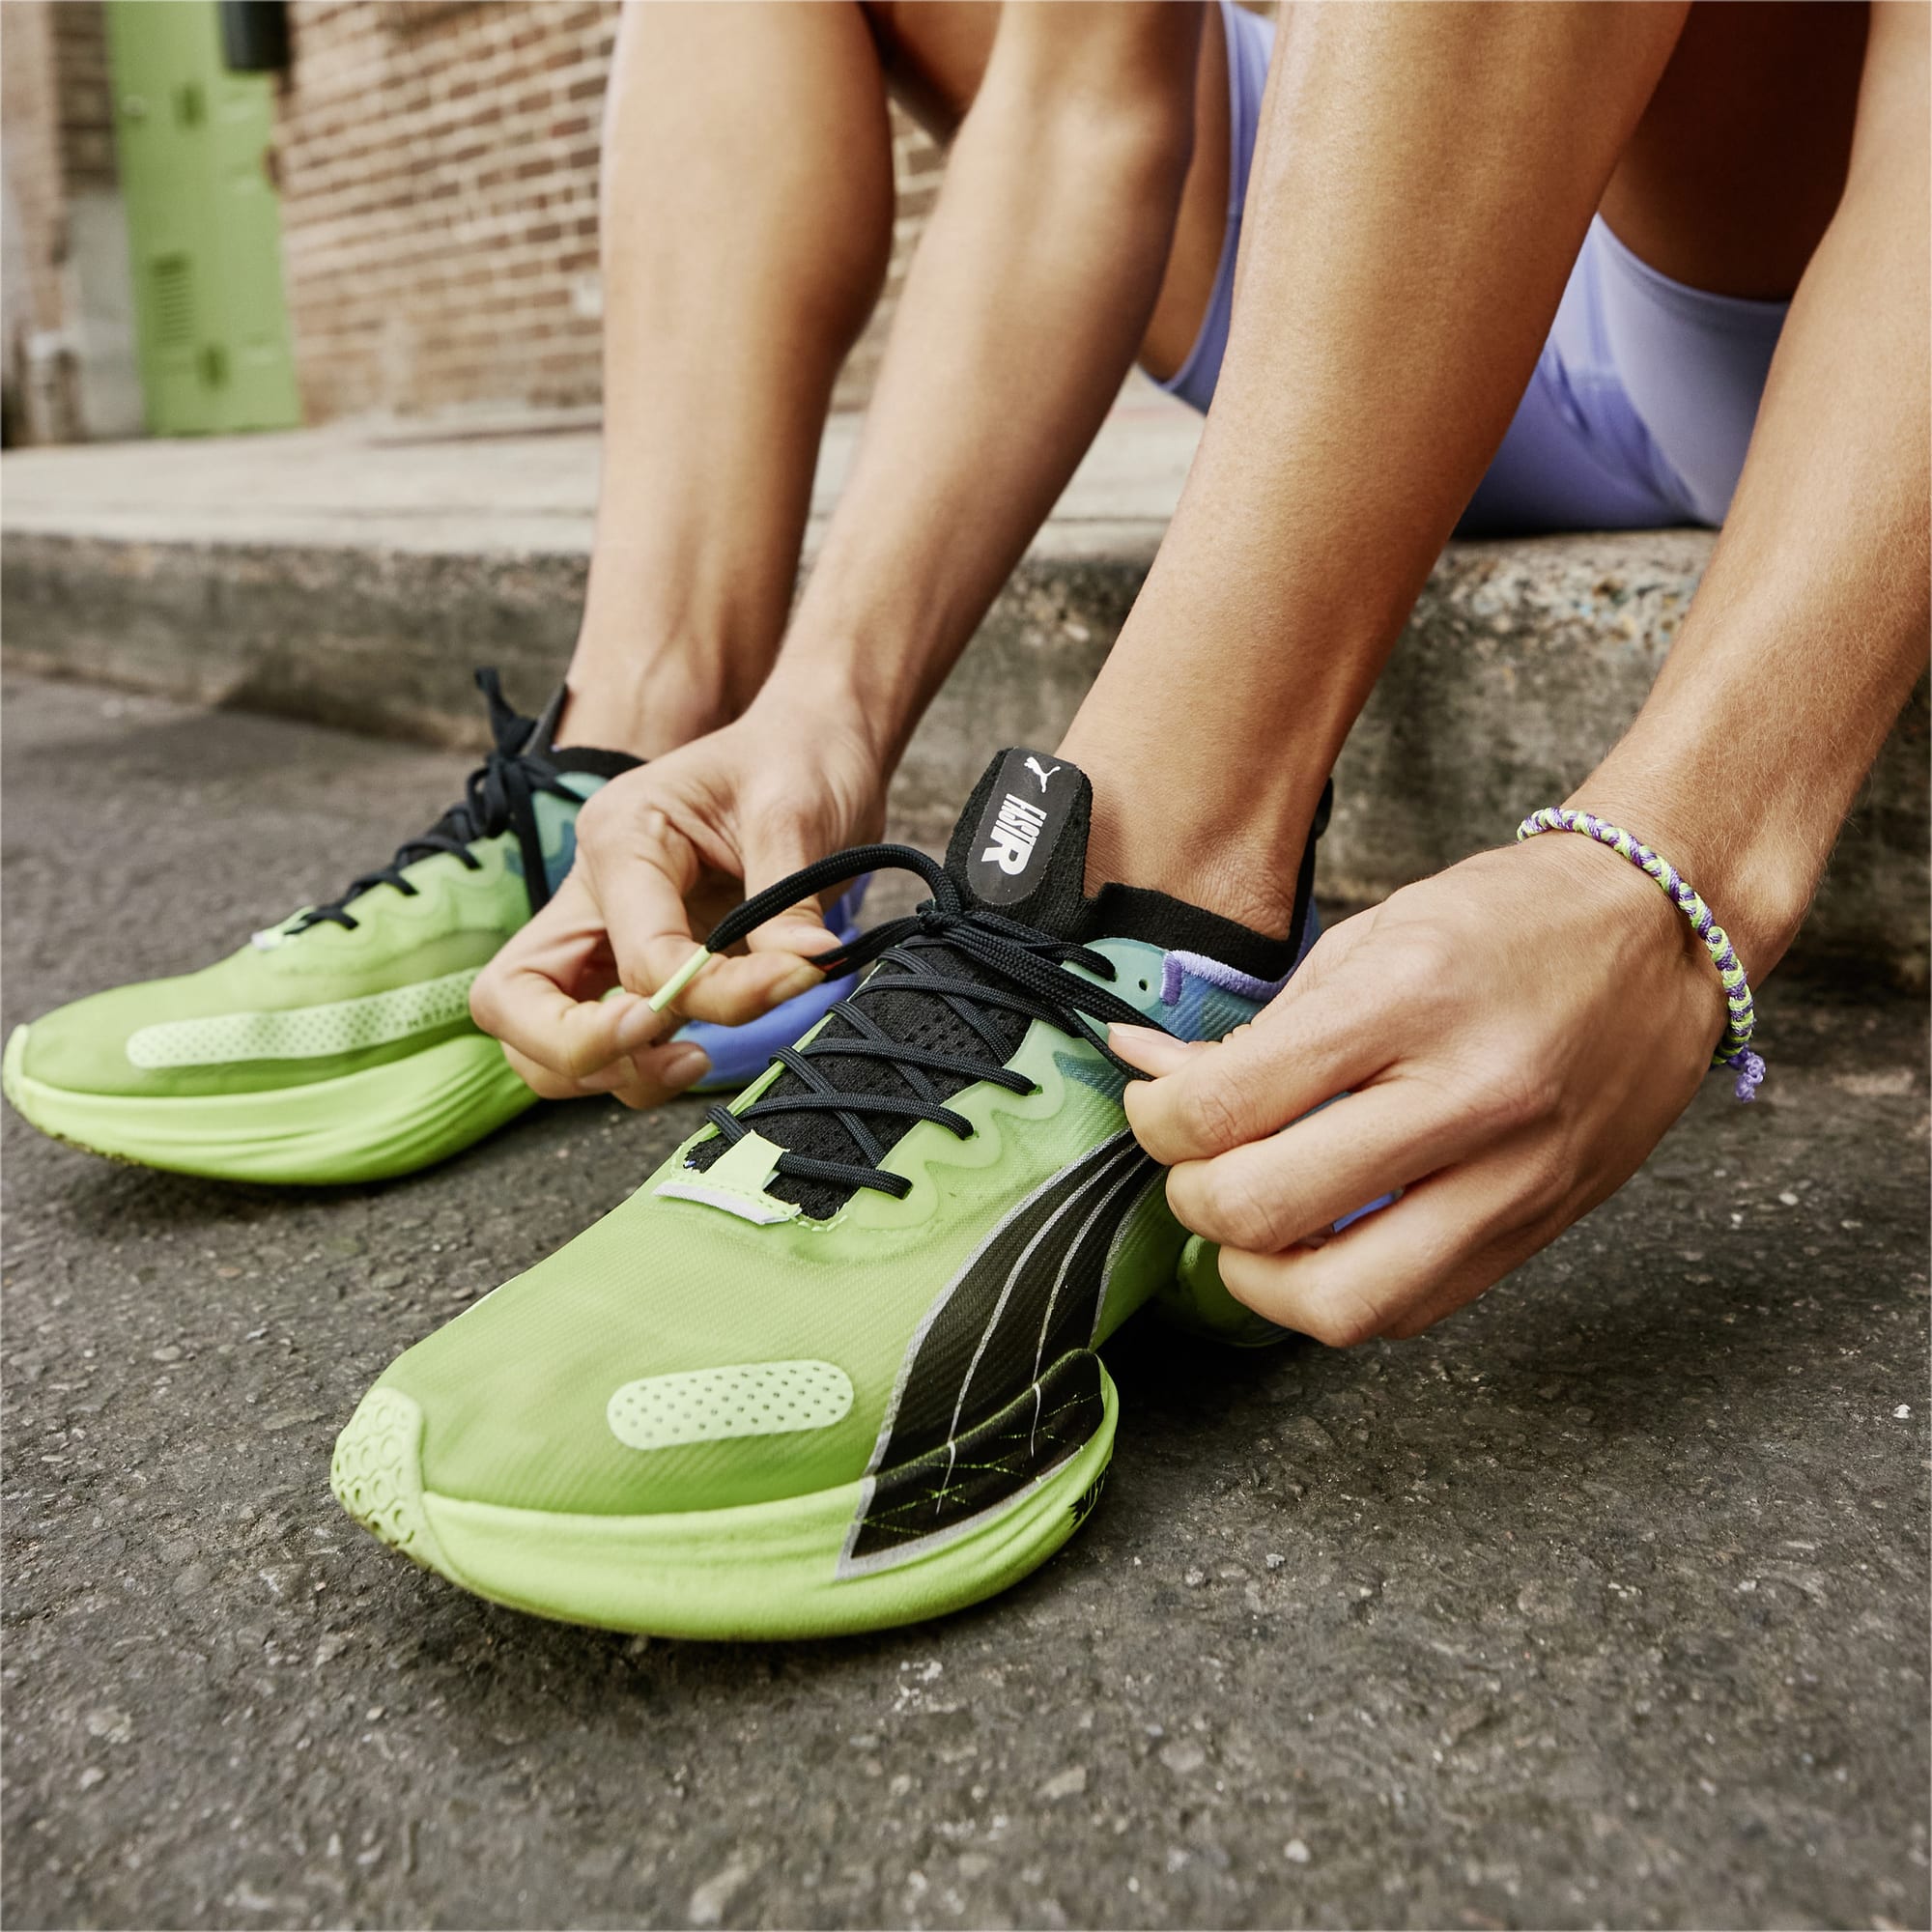 Fast-R Elite Elektrocharged Men's Running Shoes